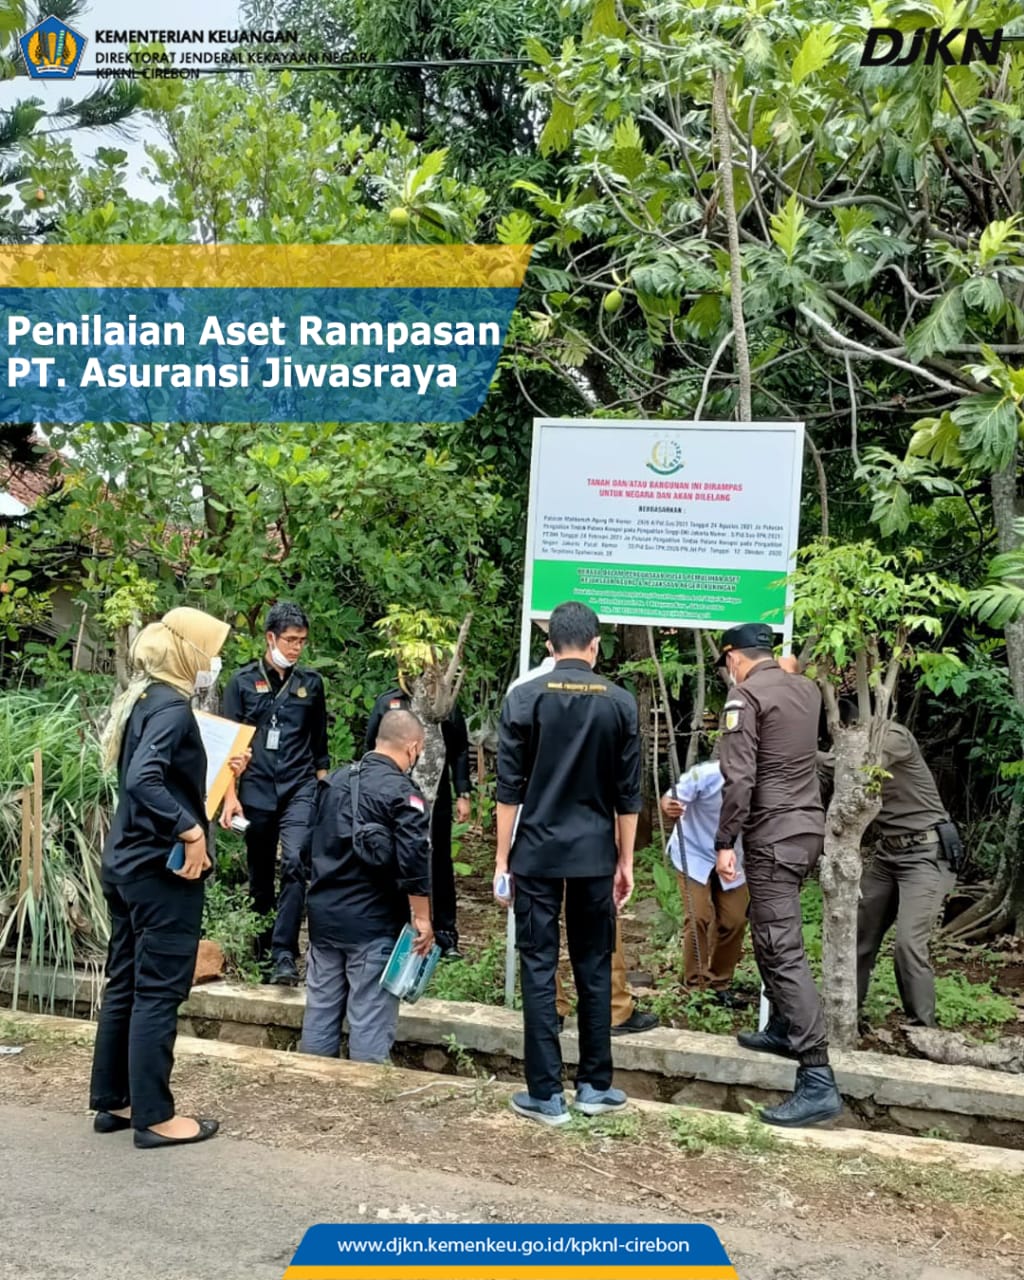 Bersinergi Dengan Kejaksaan, KPKNL Cirebon Amankan Aset PT. Asuransi Jiwasraya